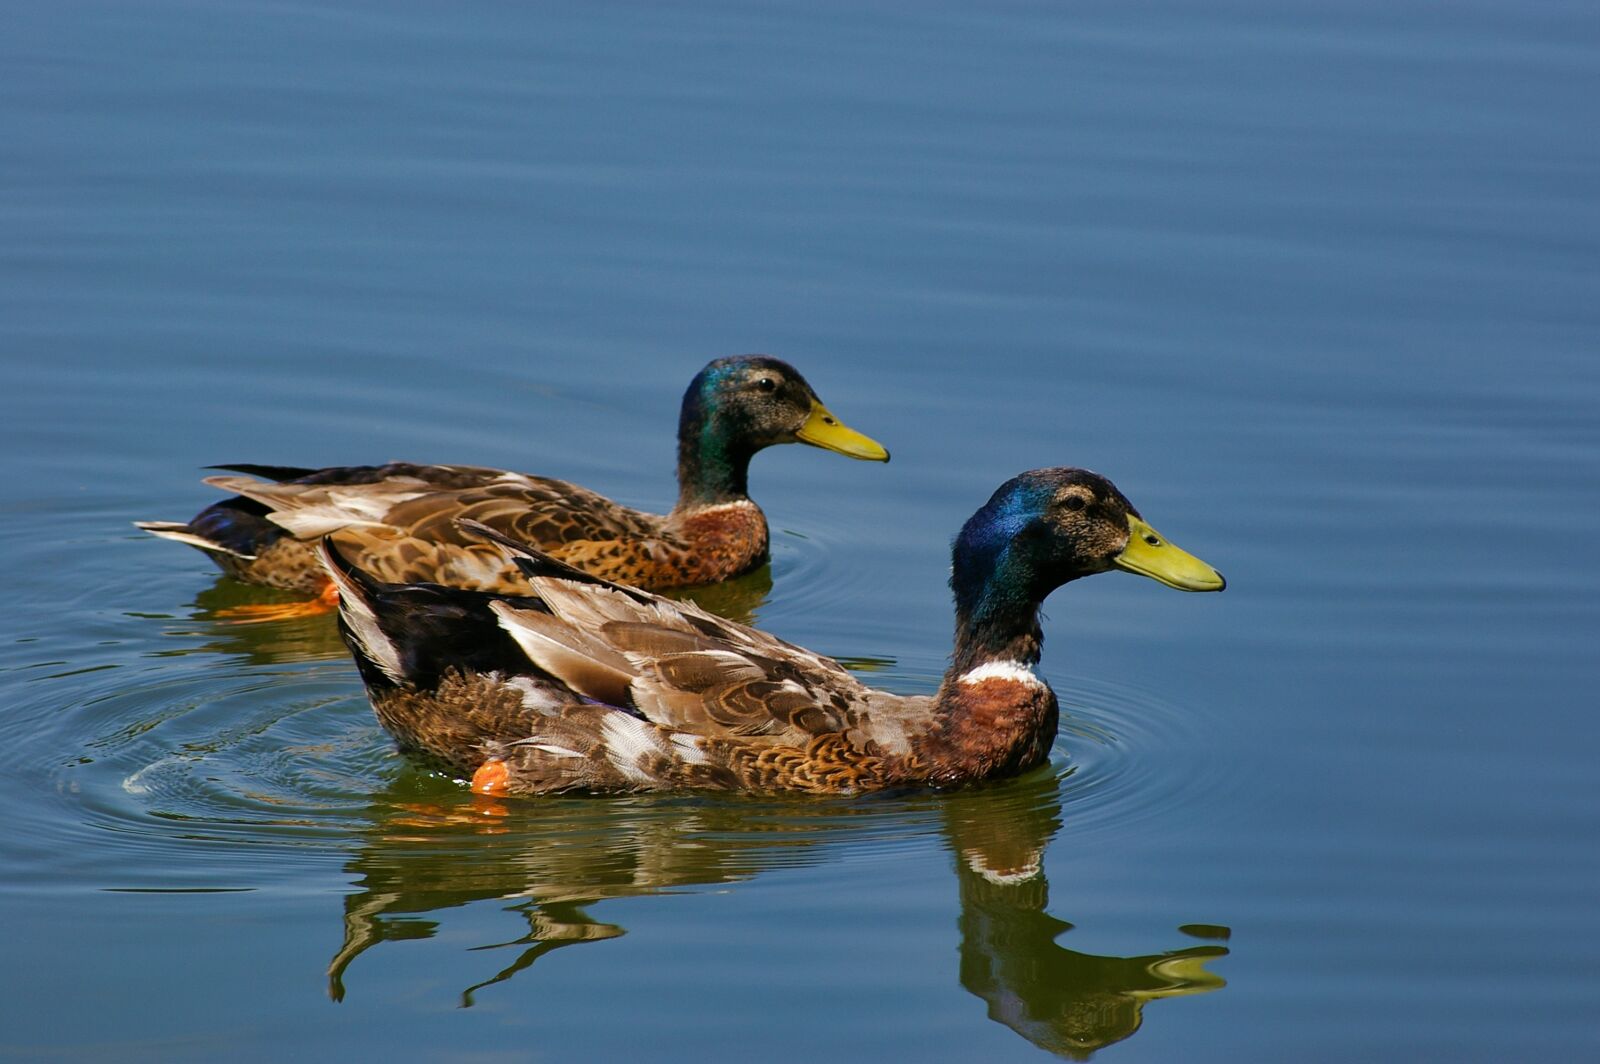 Pentax *ist DL + Sigma sample photo. Duck, mallard, animals photography